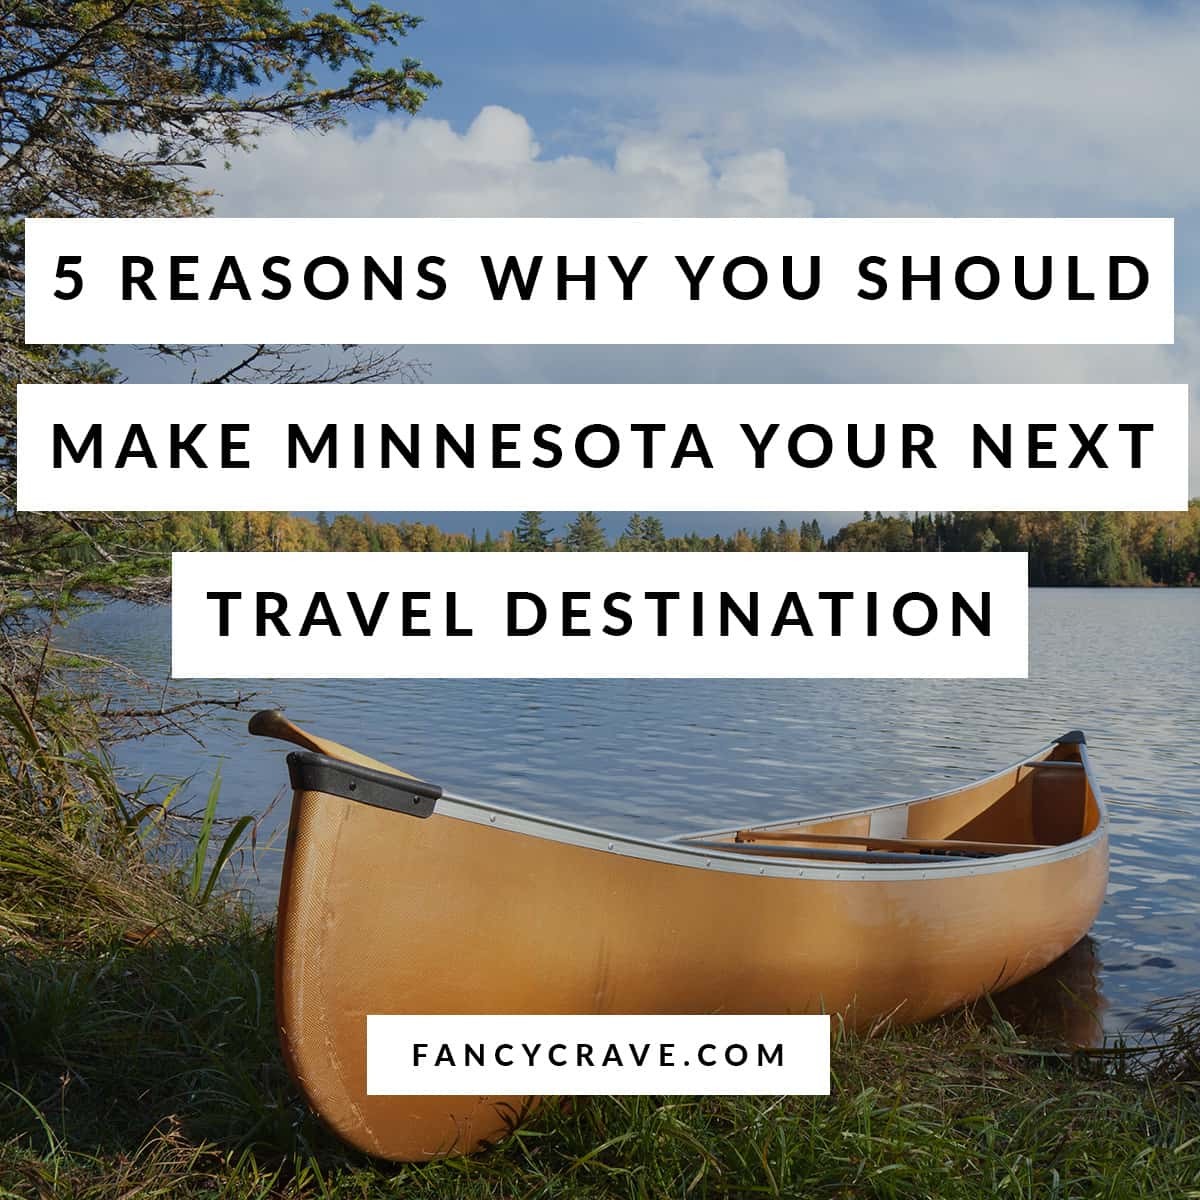 Travel to Minnesota